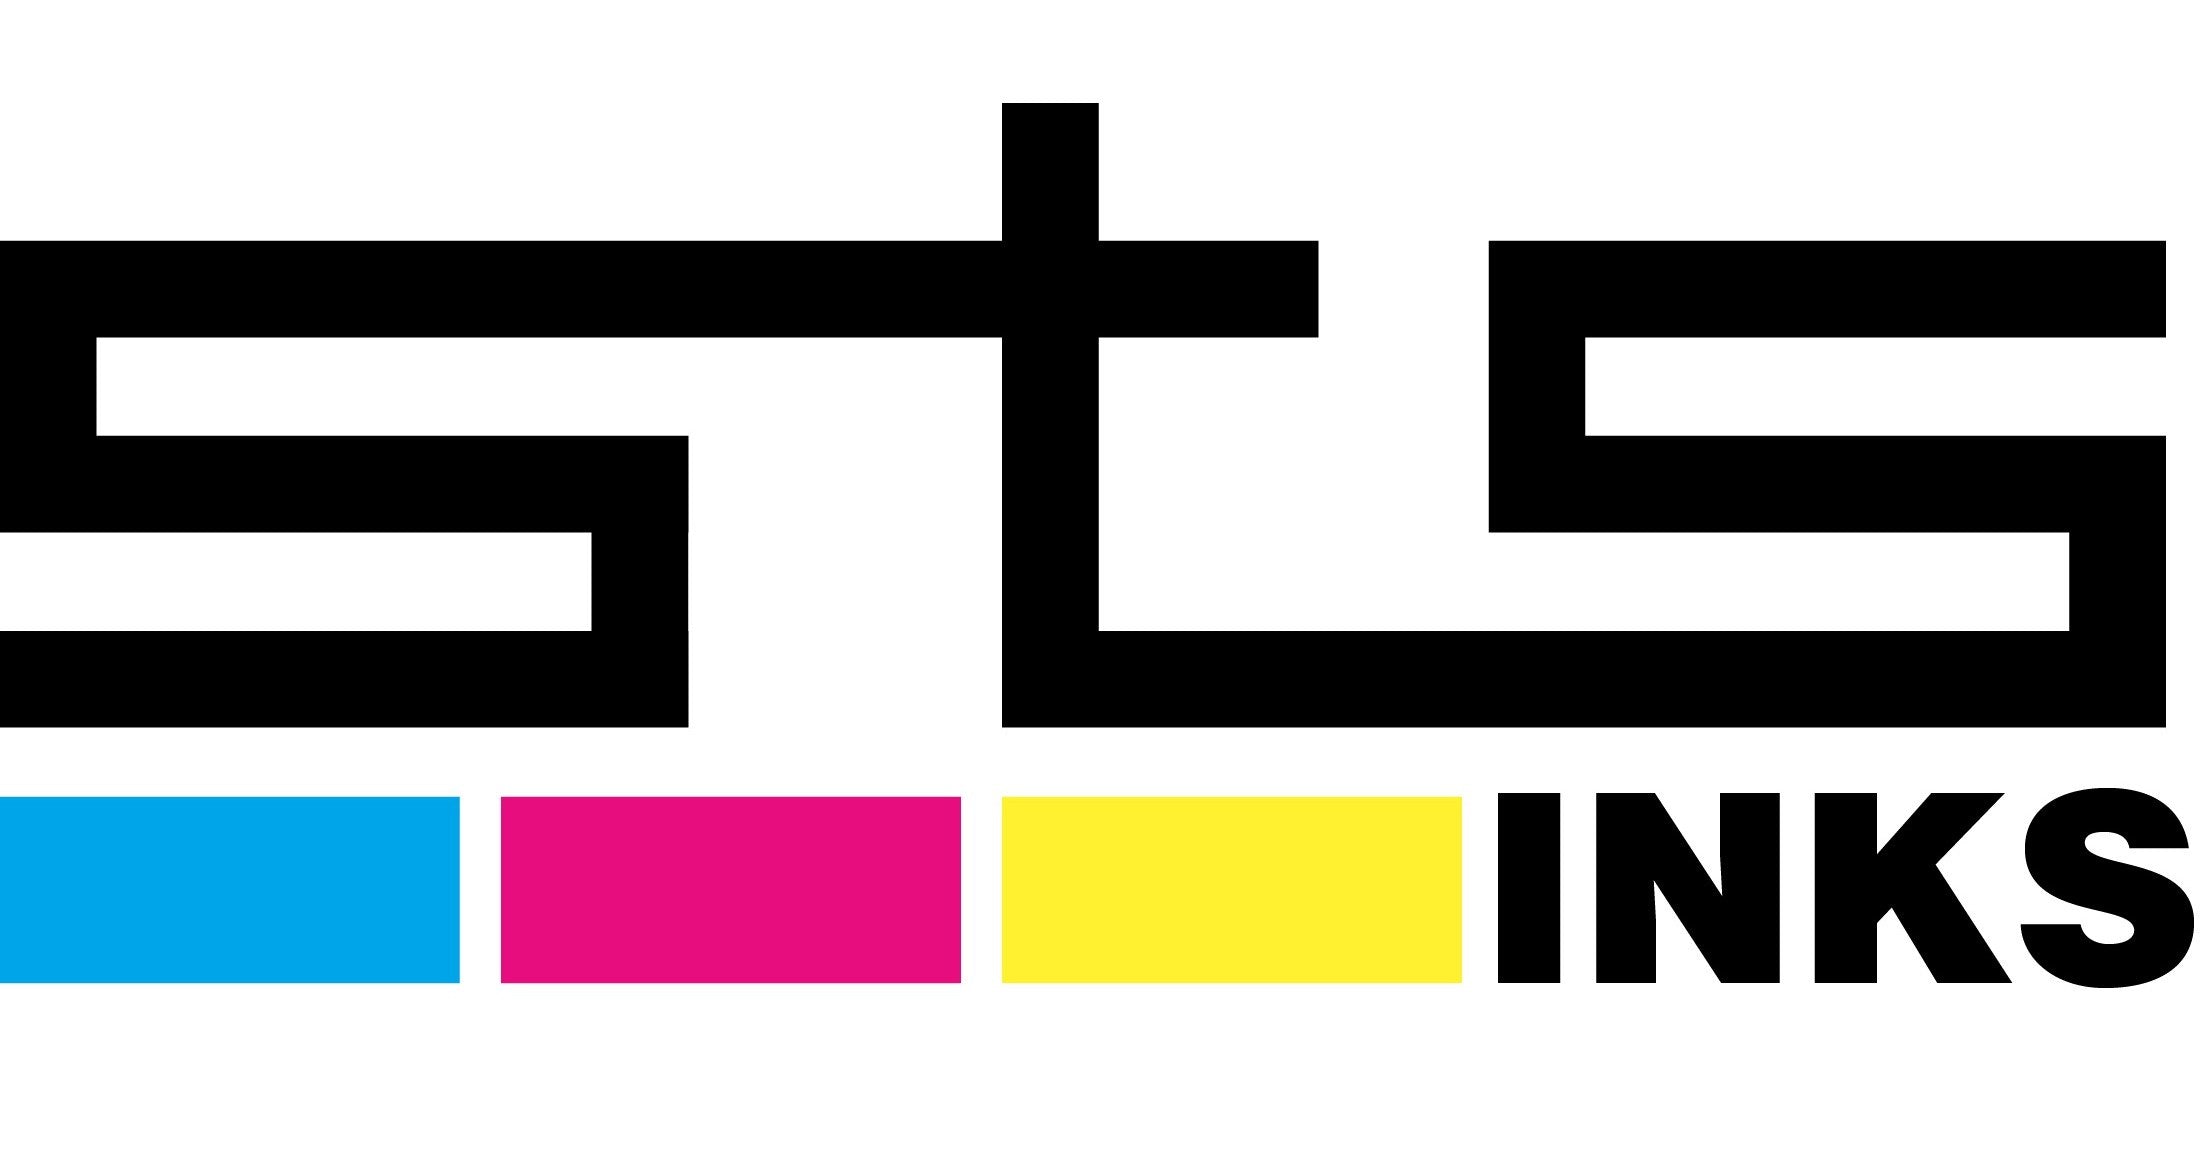 STS Inks Logo